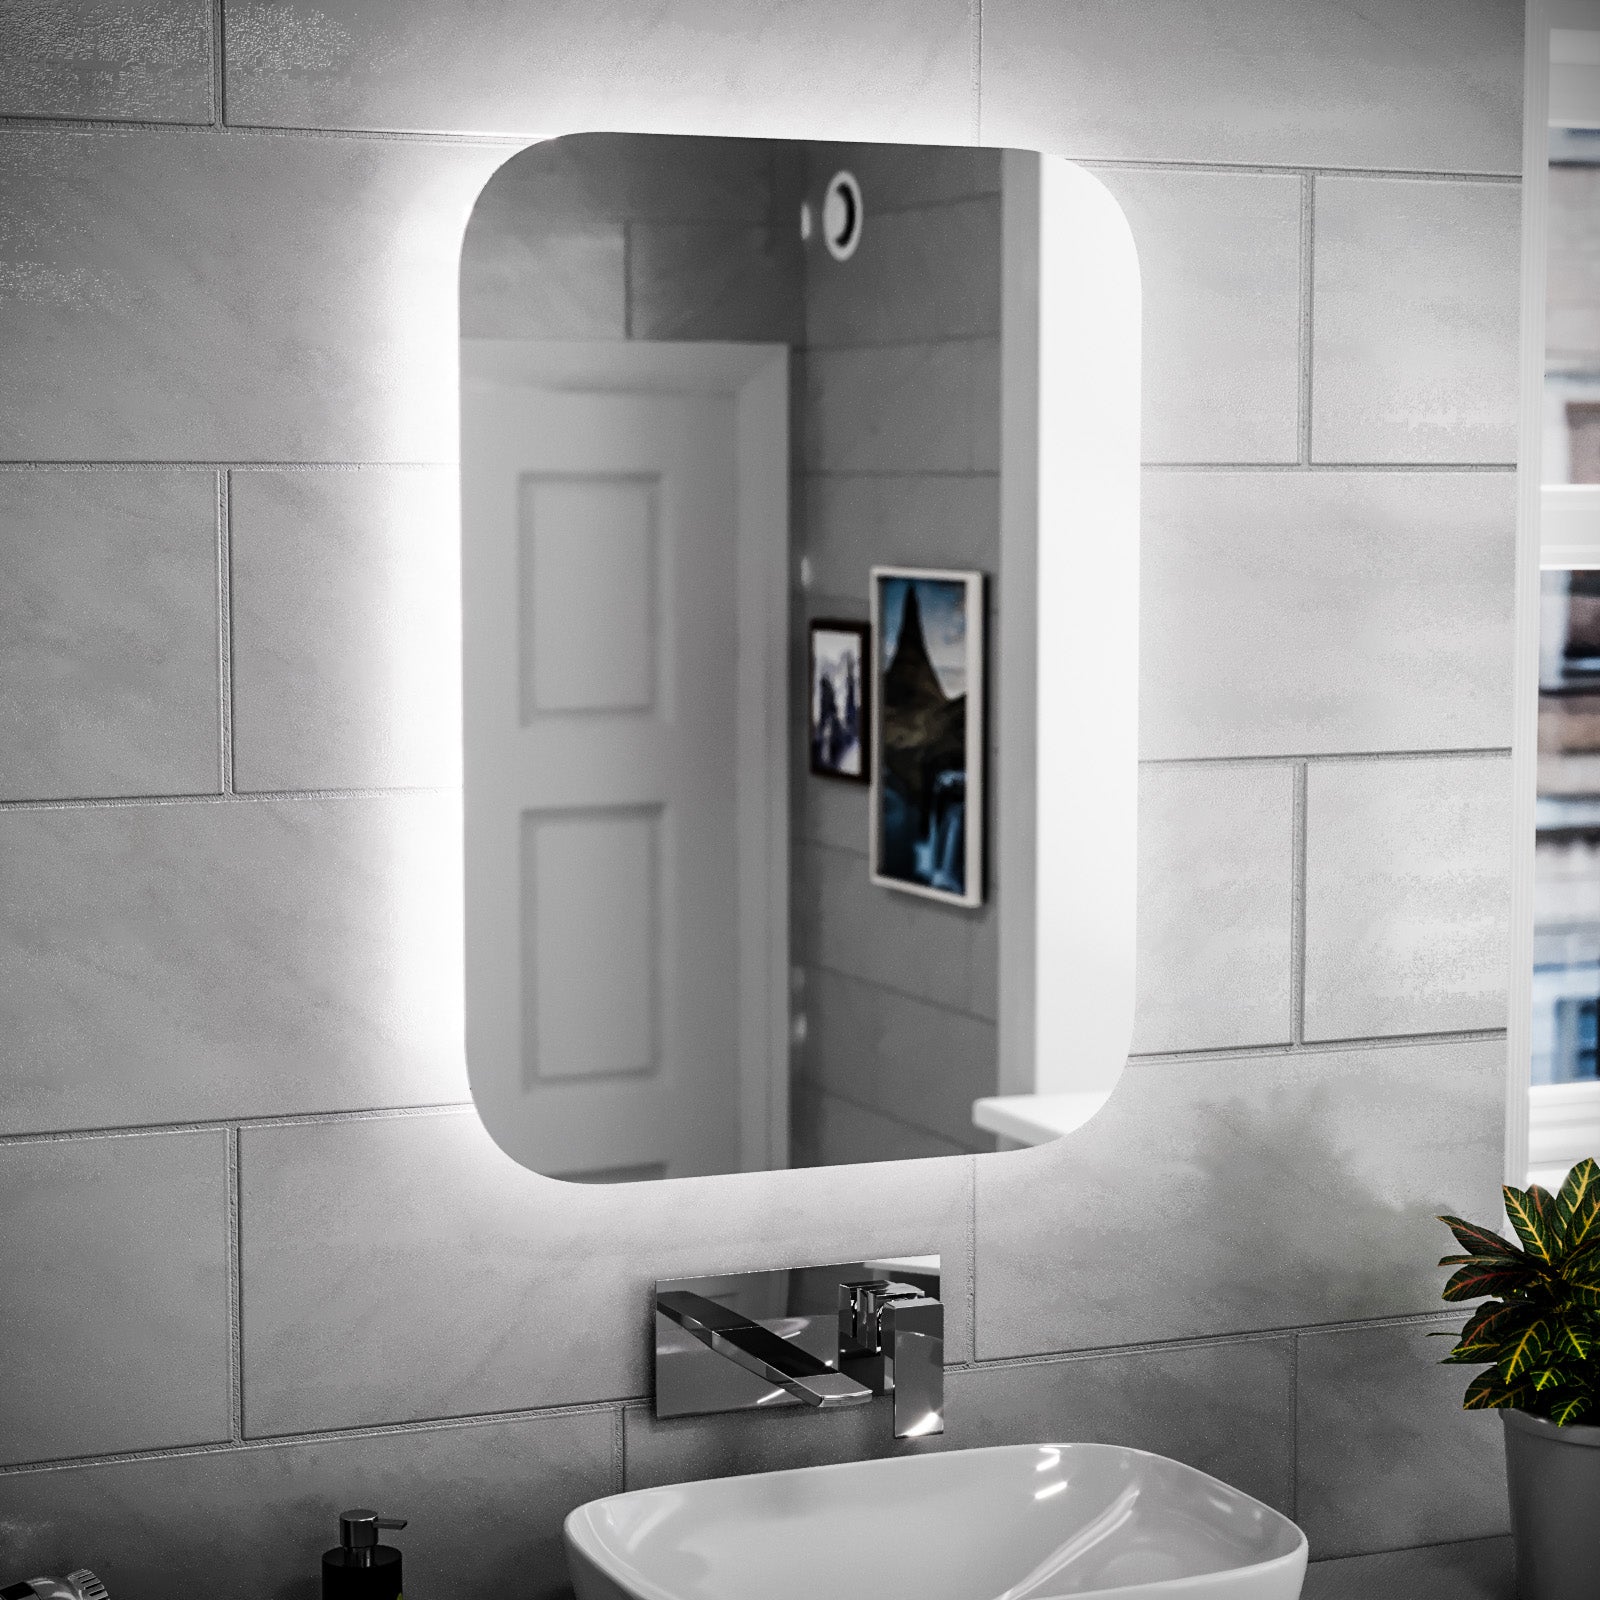 LED 500mm x 700mm Battery powered Bathroom Mirror